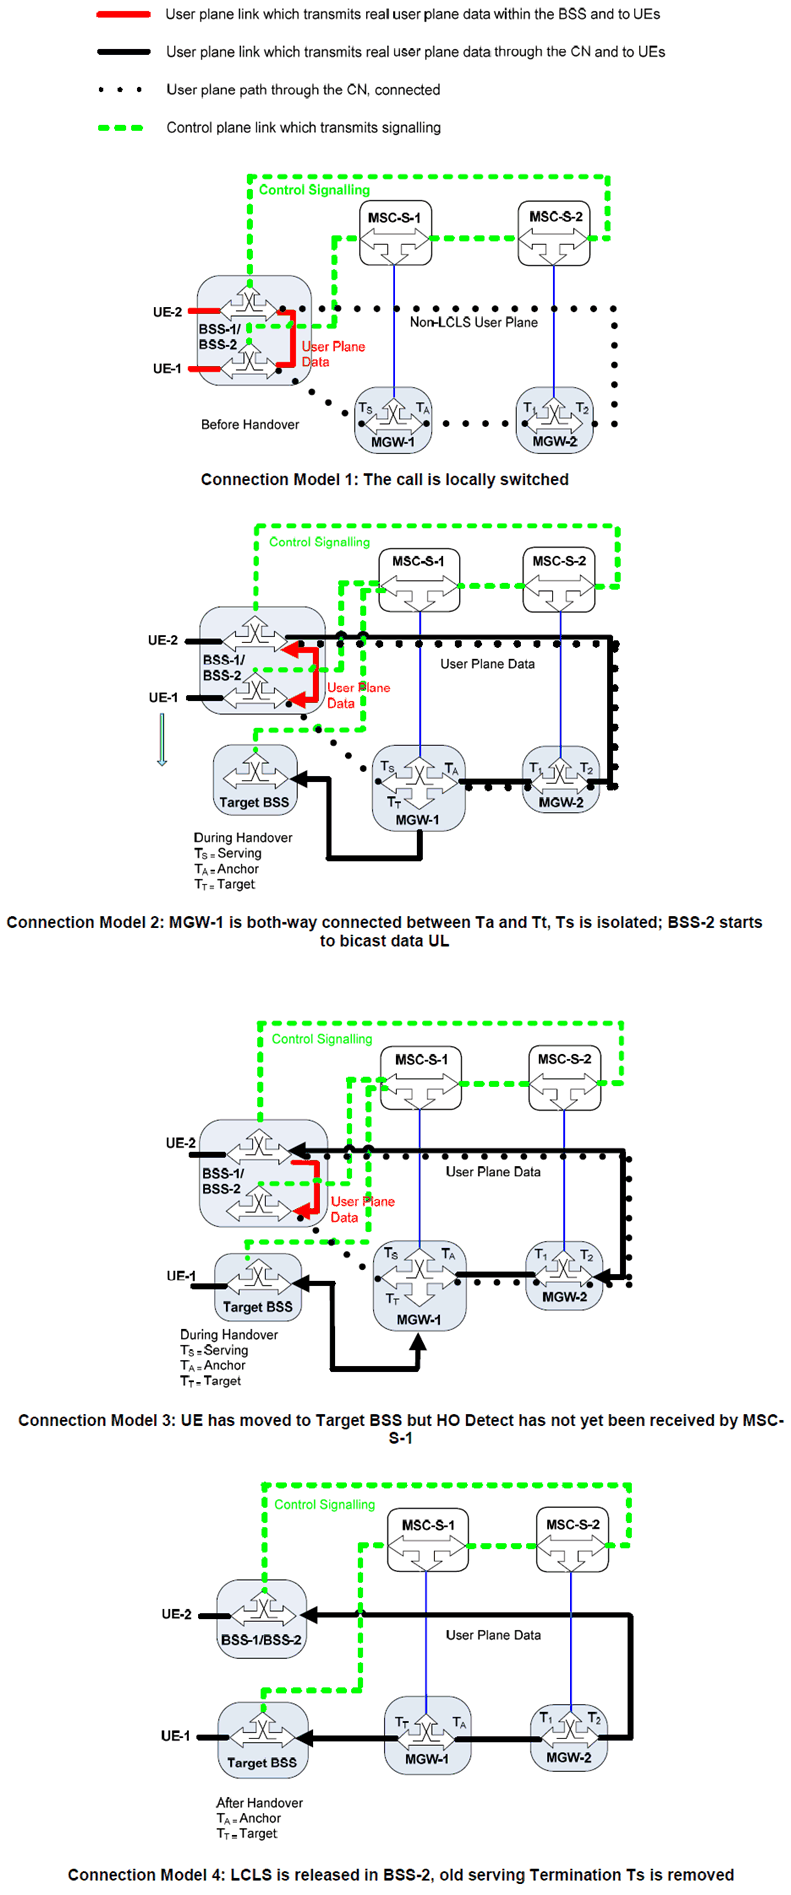 Copy of original 3GPP image for 3GPP TS 23.284, Fig. 8.4.1.1.7.1.1: Intra-MSC Inter-BSS Handover Connection Model that breaks LCLS